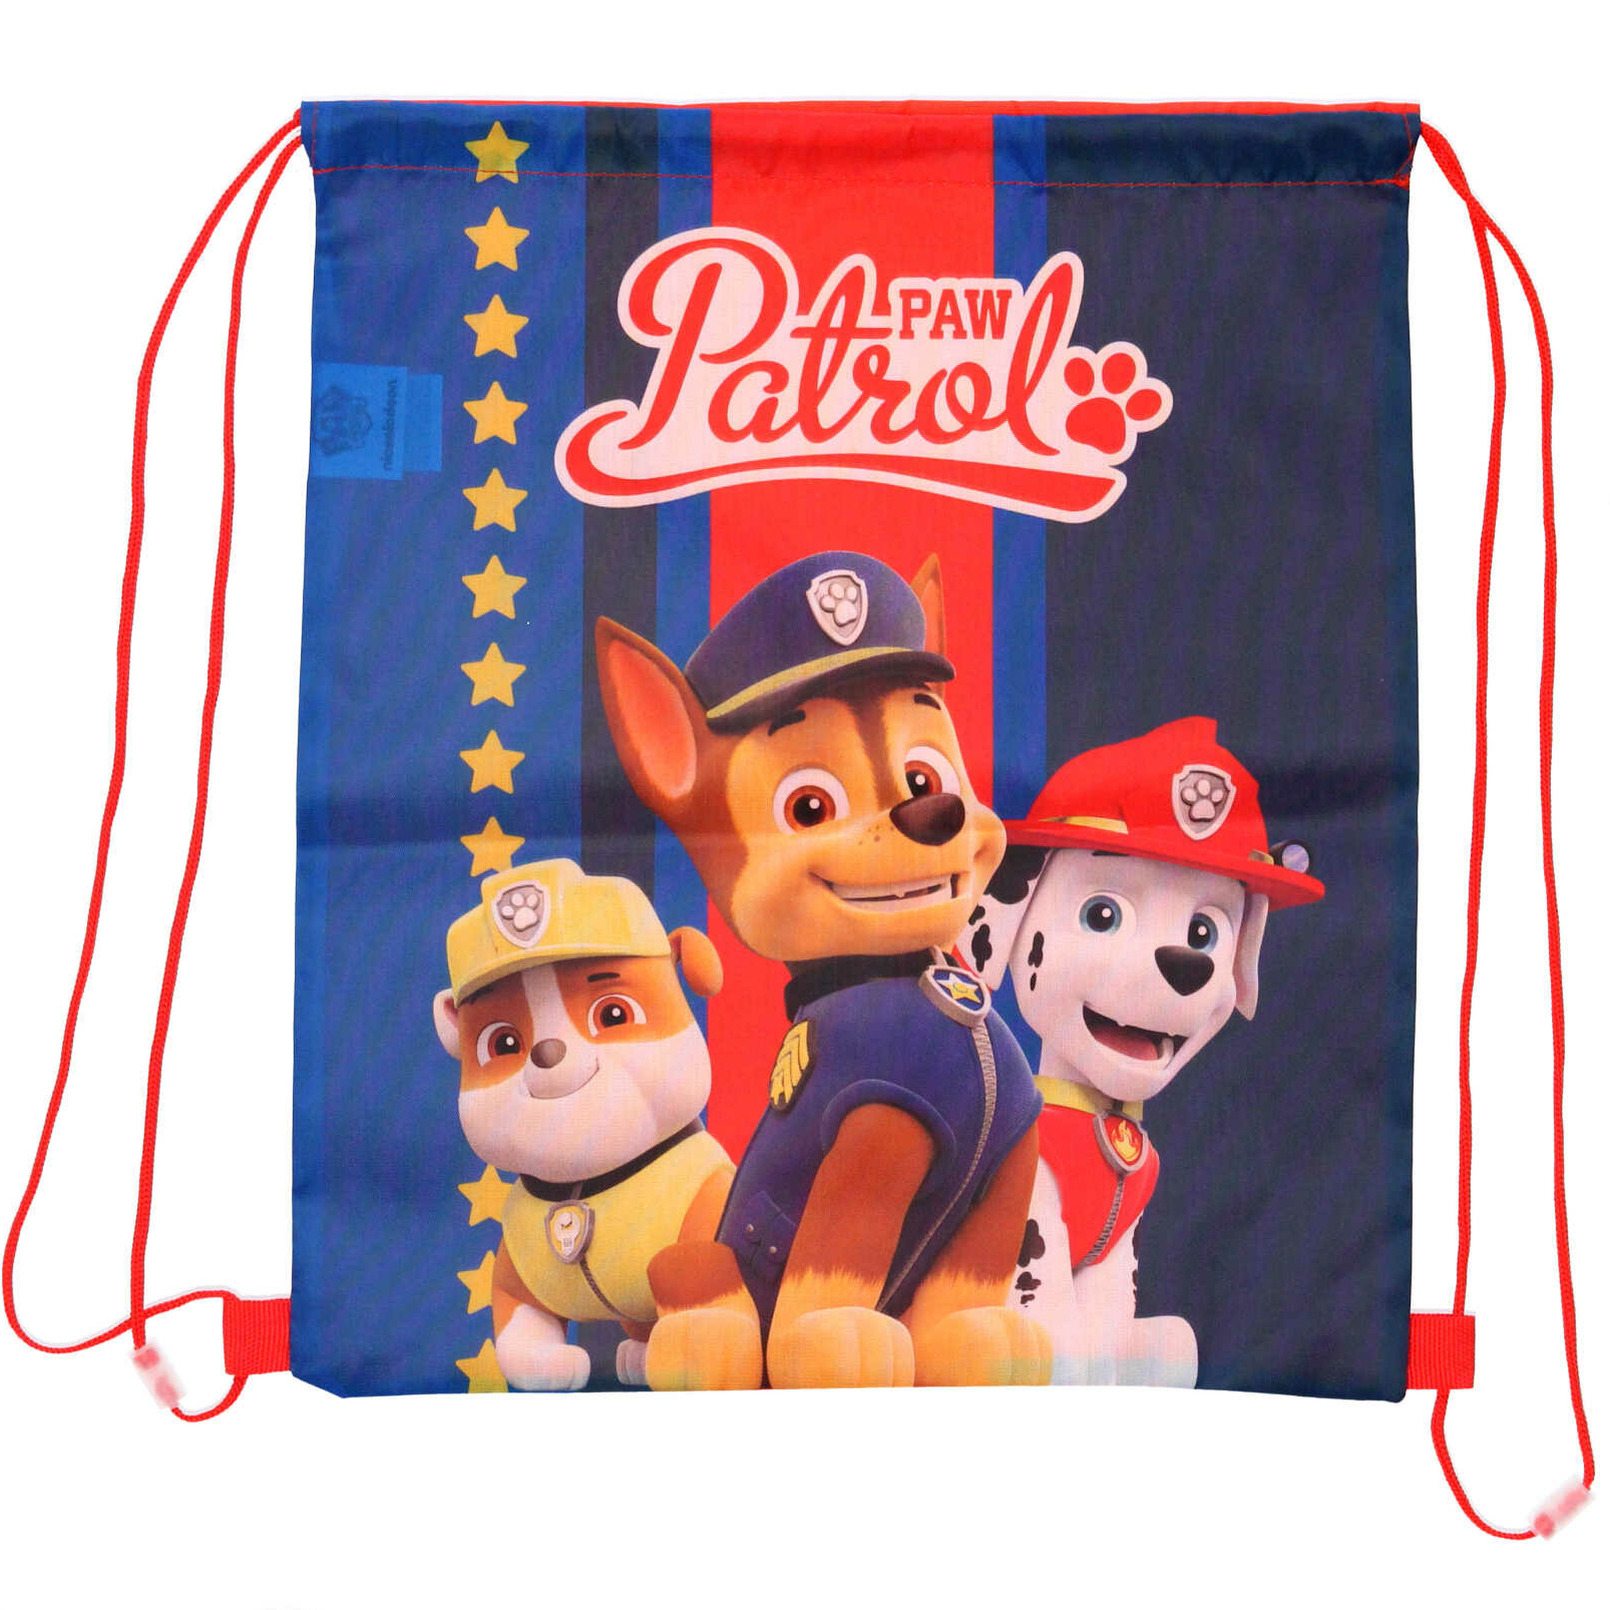 Paw Patrol Chase gymtas-rugzak-rugtas voor kinderen blauw-rood polyester 40 x 35 cm